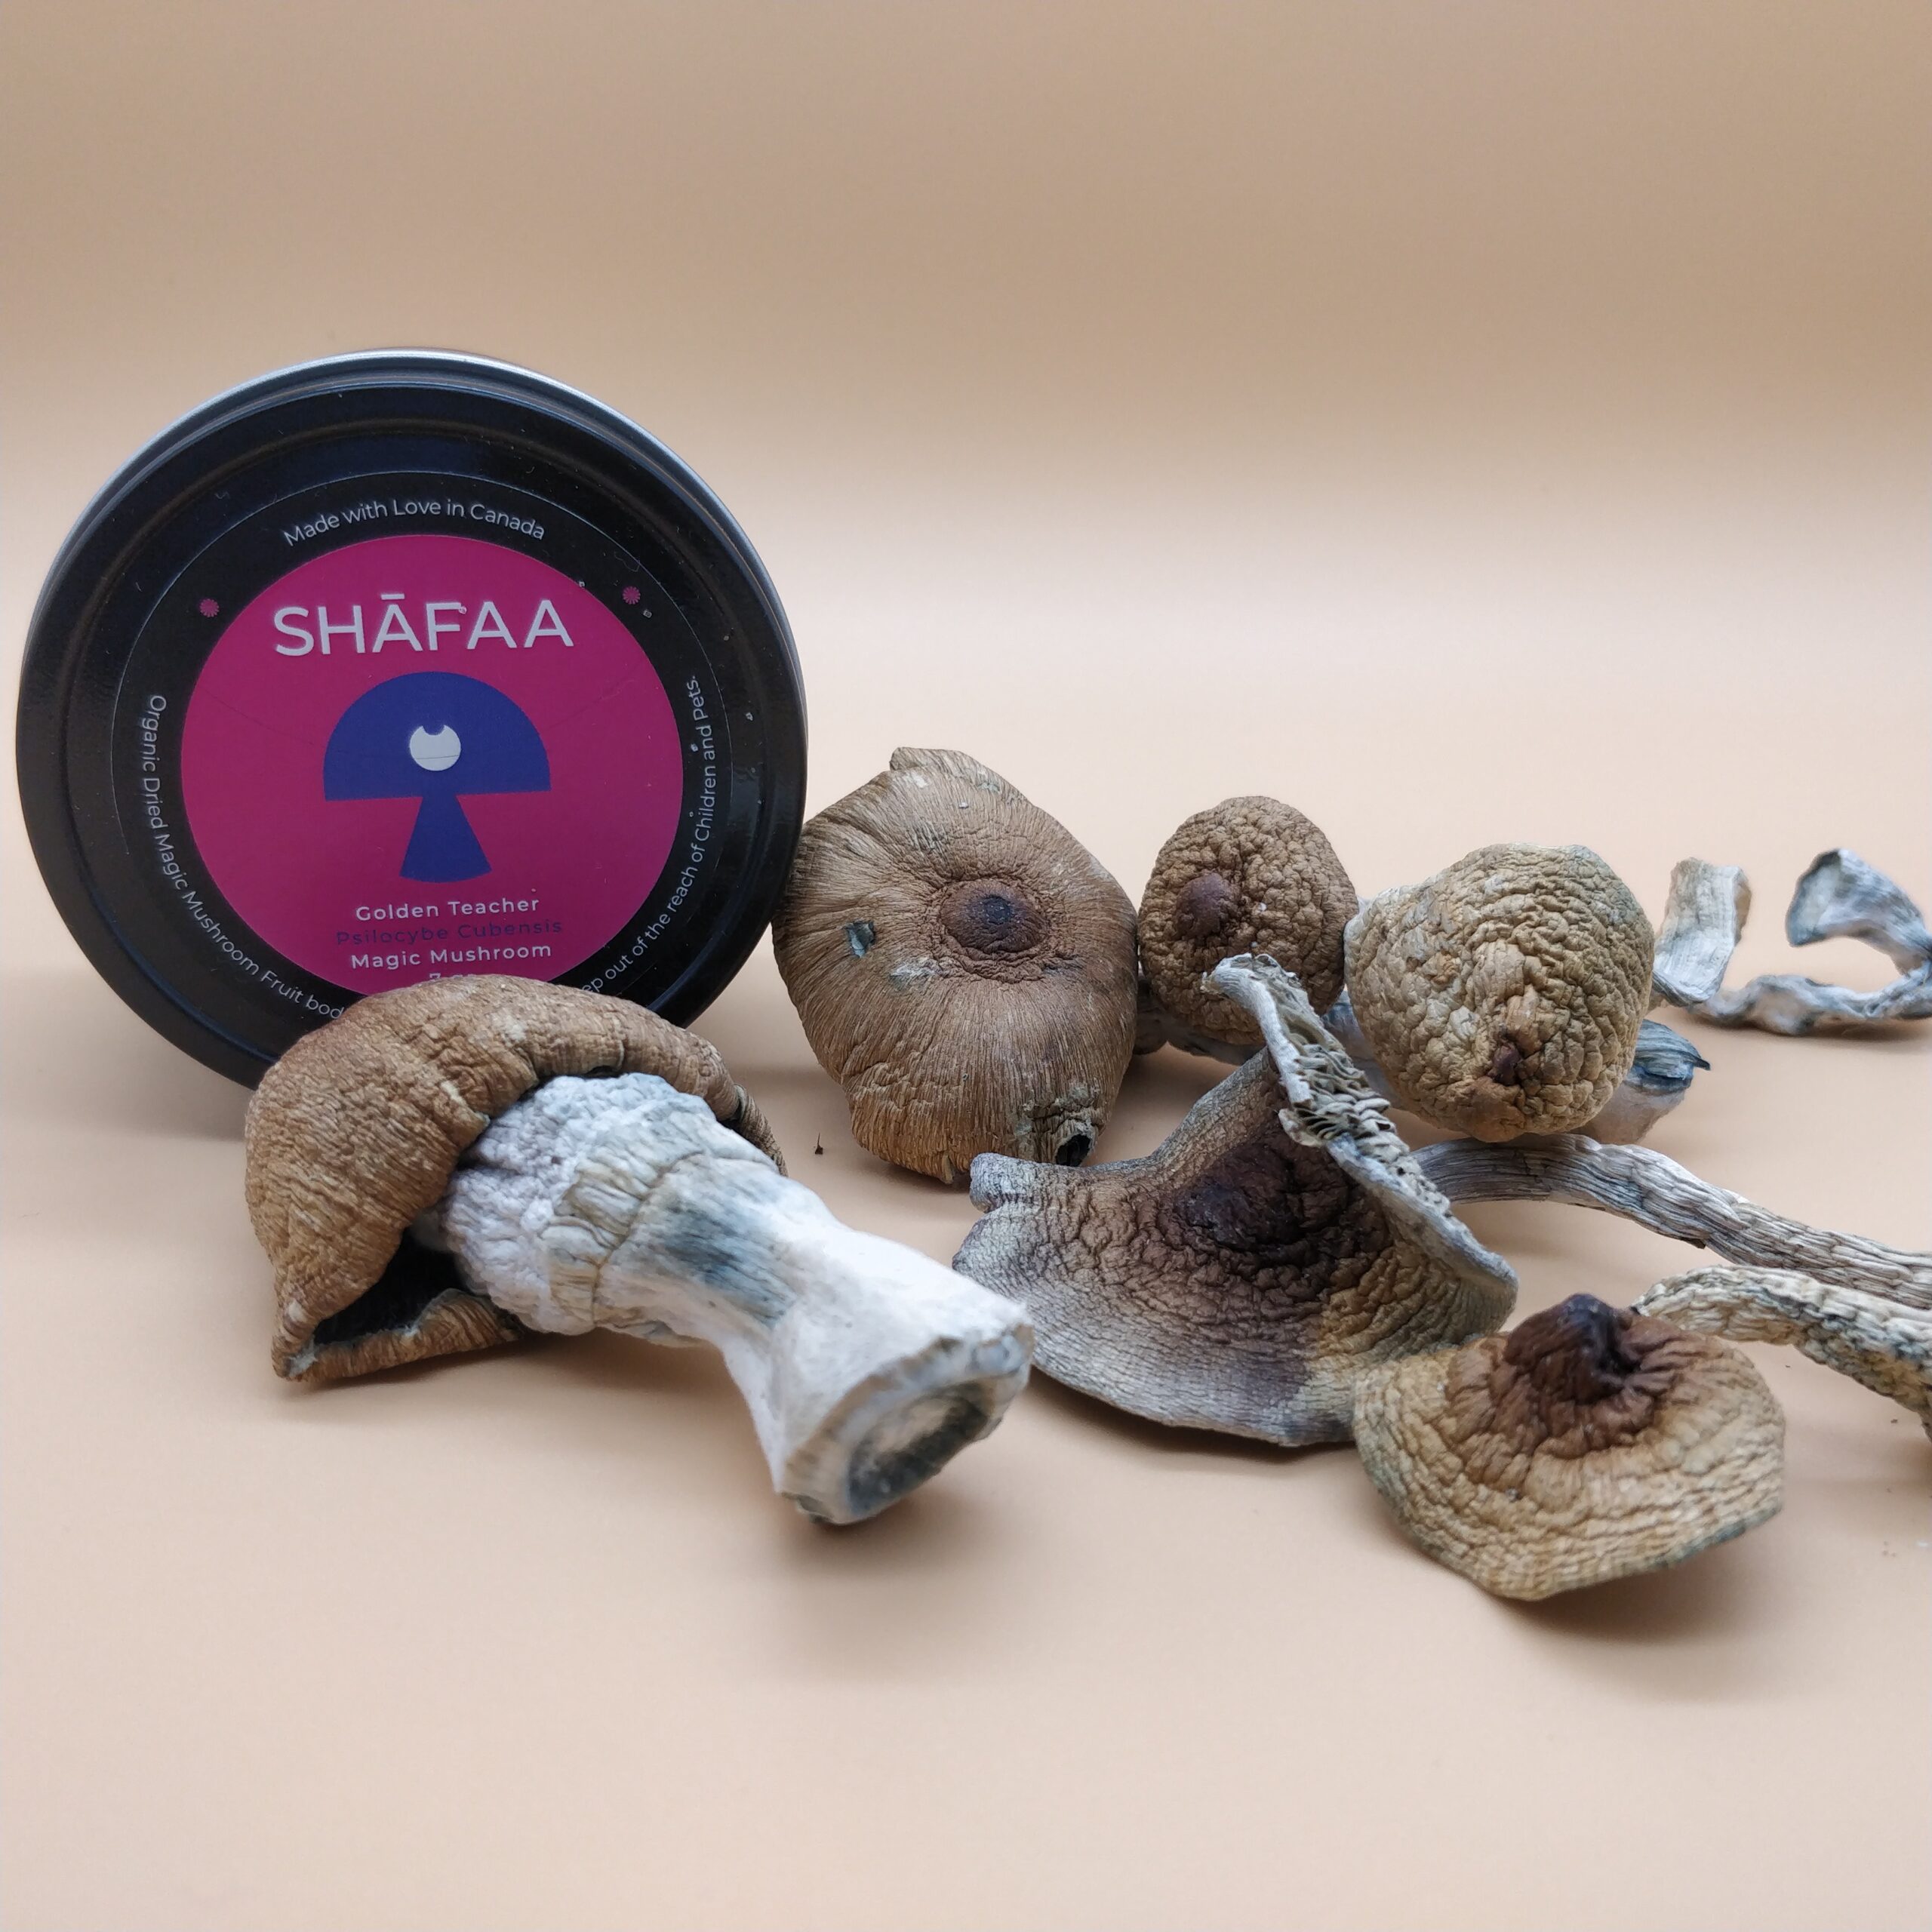 Buy Golden Teacher Dried Magic Mushrooms | SHAFAA